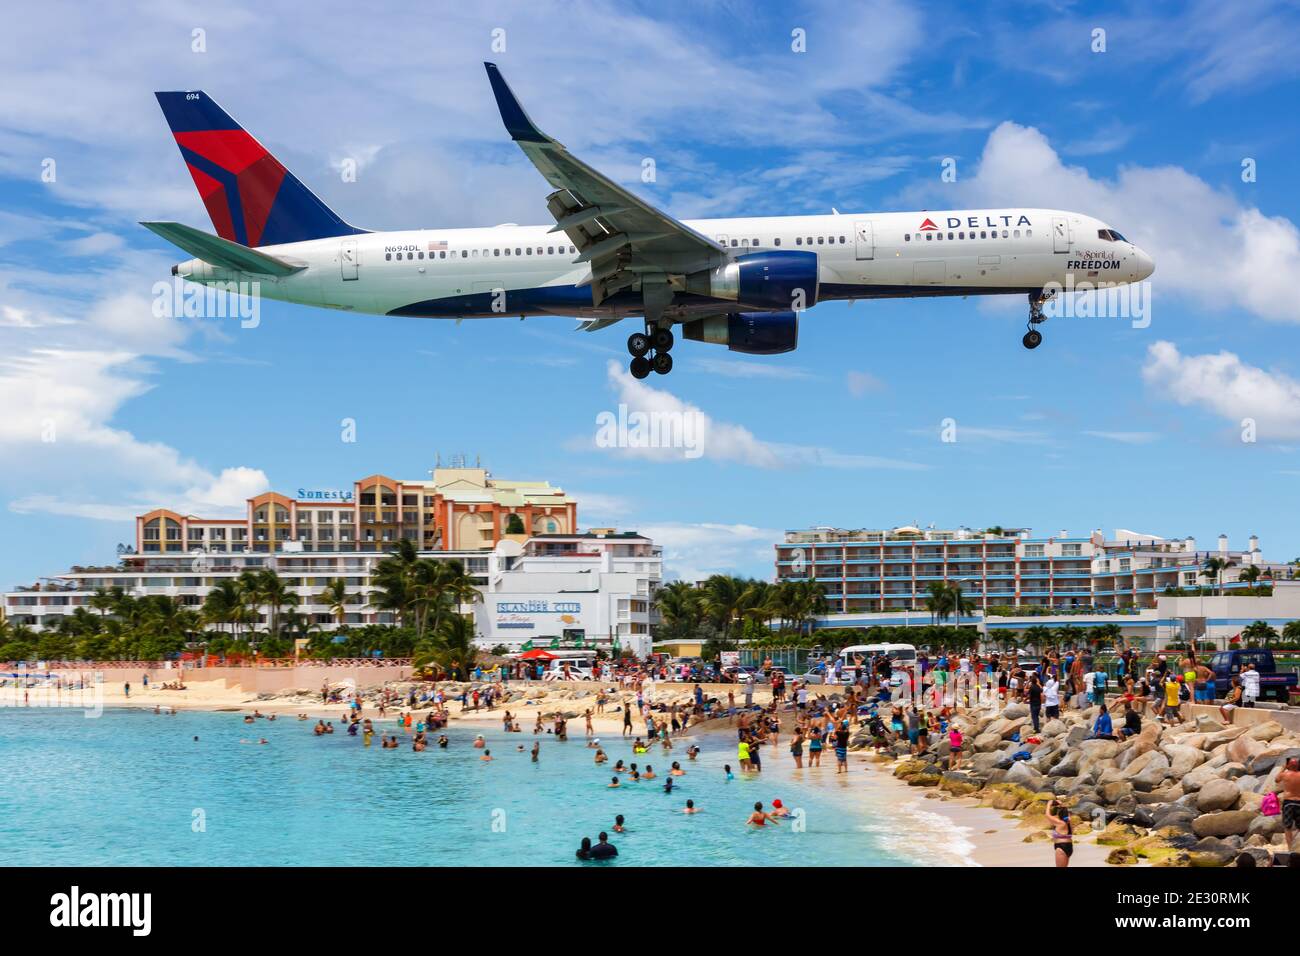 Sint Maarten, Netherlands Antilles - September 17, 2016: Delta Air Lines Boeing 757-200 airplane at Sint Maarten Airport (SXM) in the Caribbean. Stock Photo